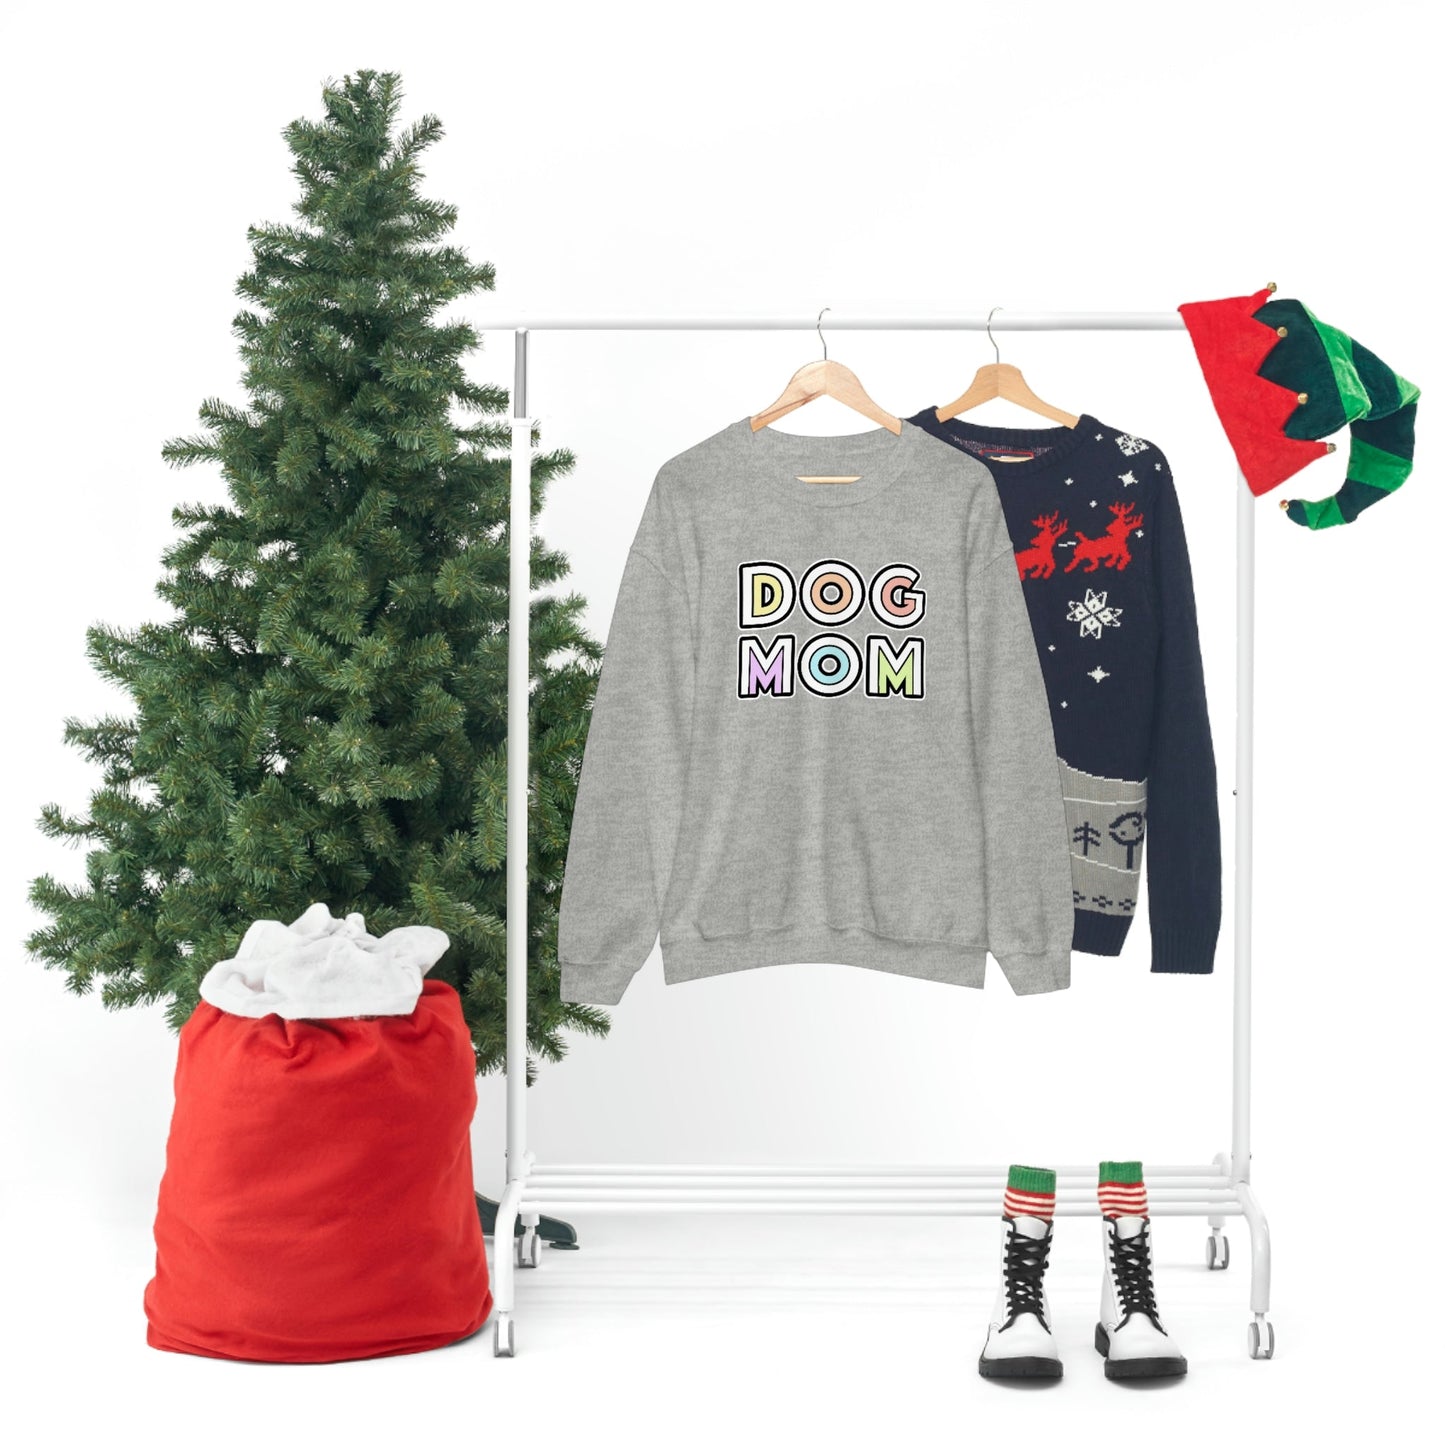 Dog Mom Retro | Crewneck Sweatshirt - Detezi Designs-32857171540514547013